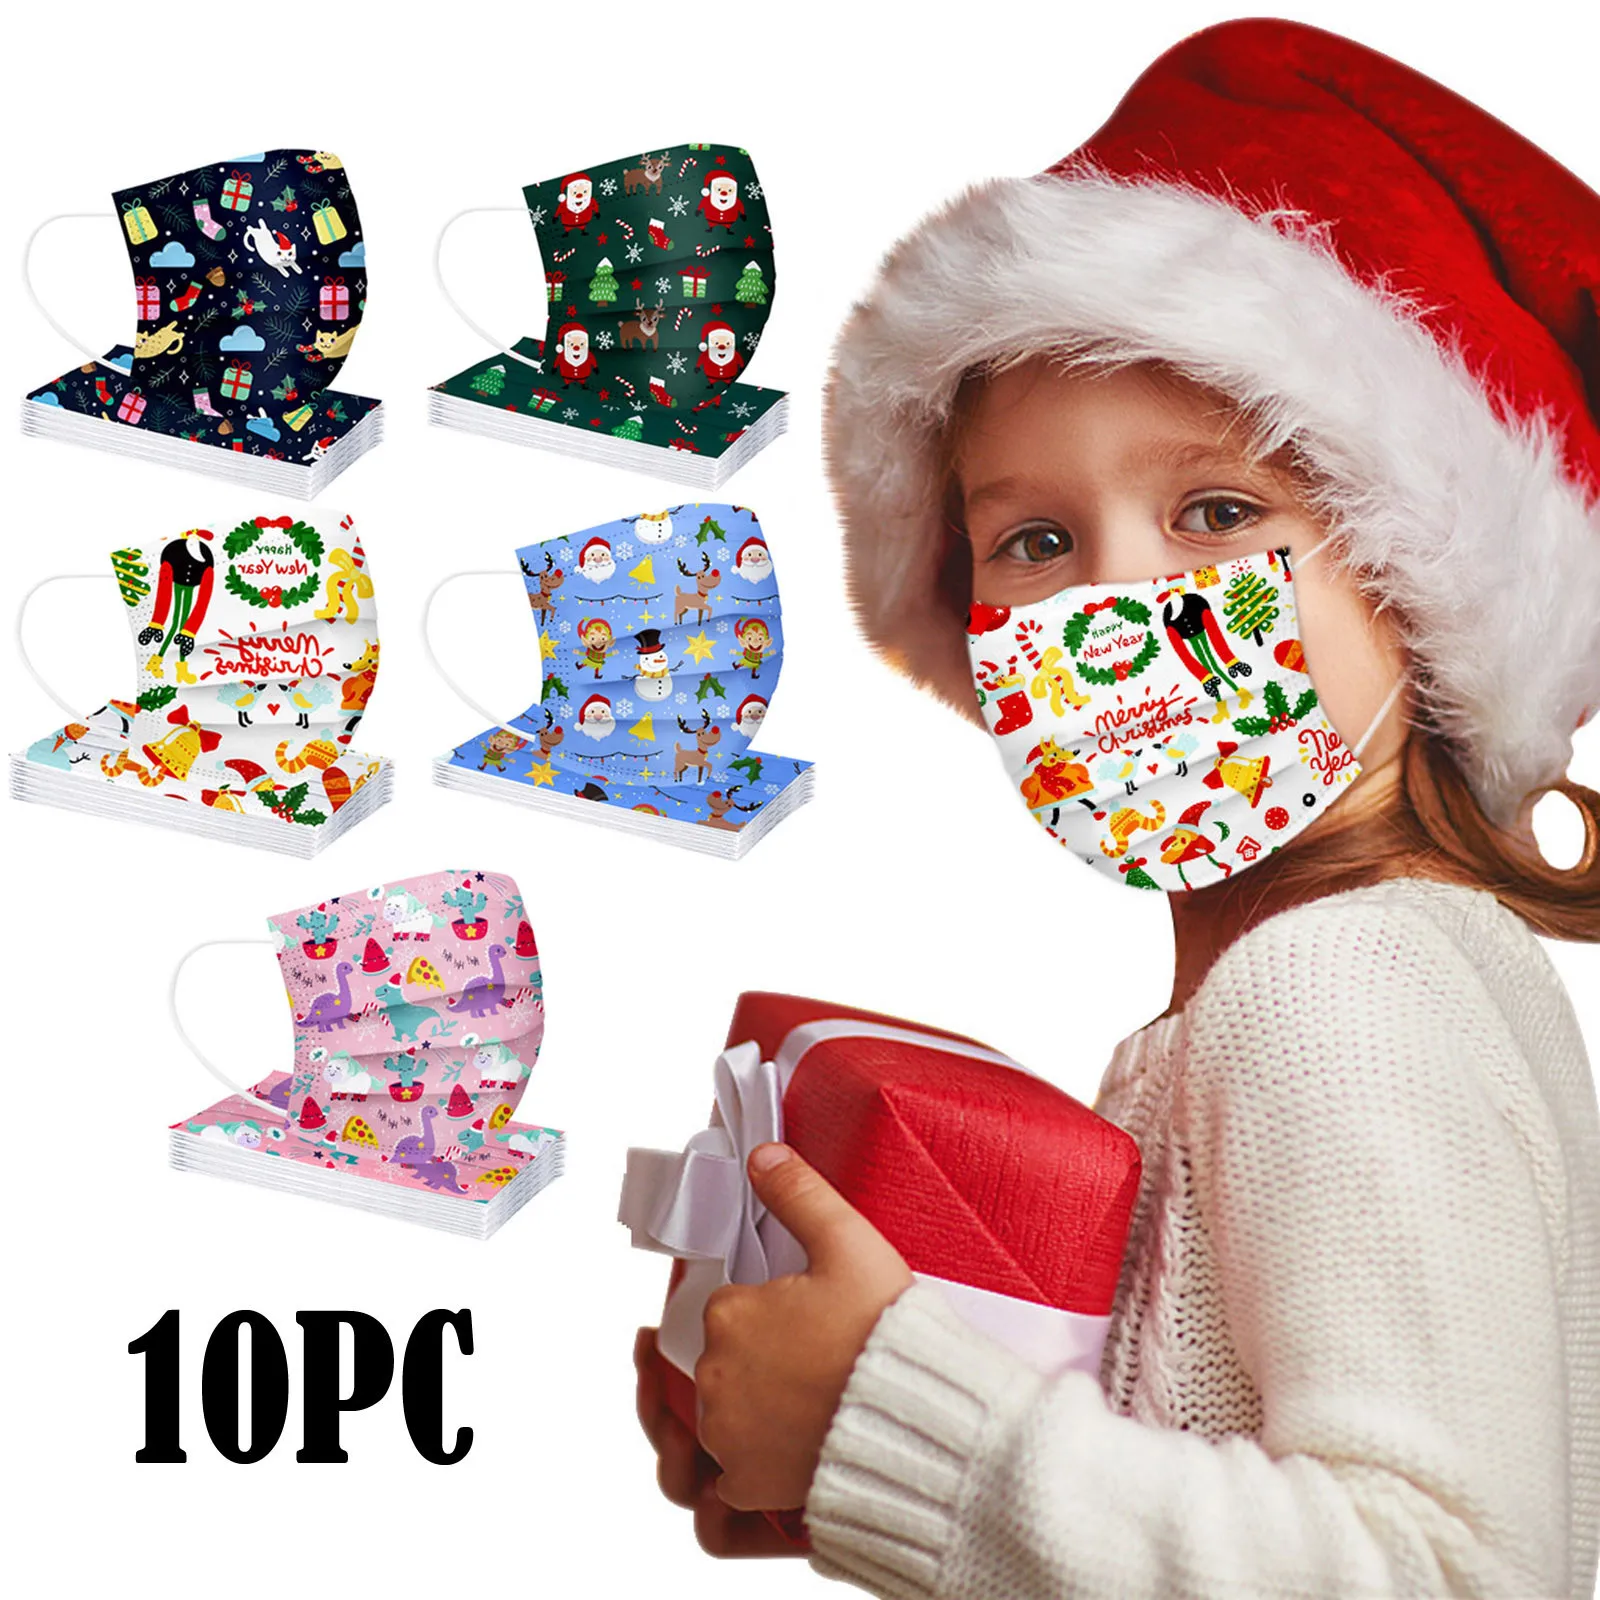 

10pc Kids Christmas Disposable Masks Unisex Printed Soft Face Cover 3-layer Child Dustproof Pm2.5 Masks Earloop Bandage Masks